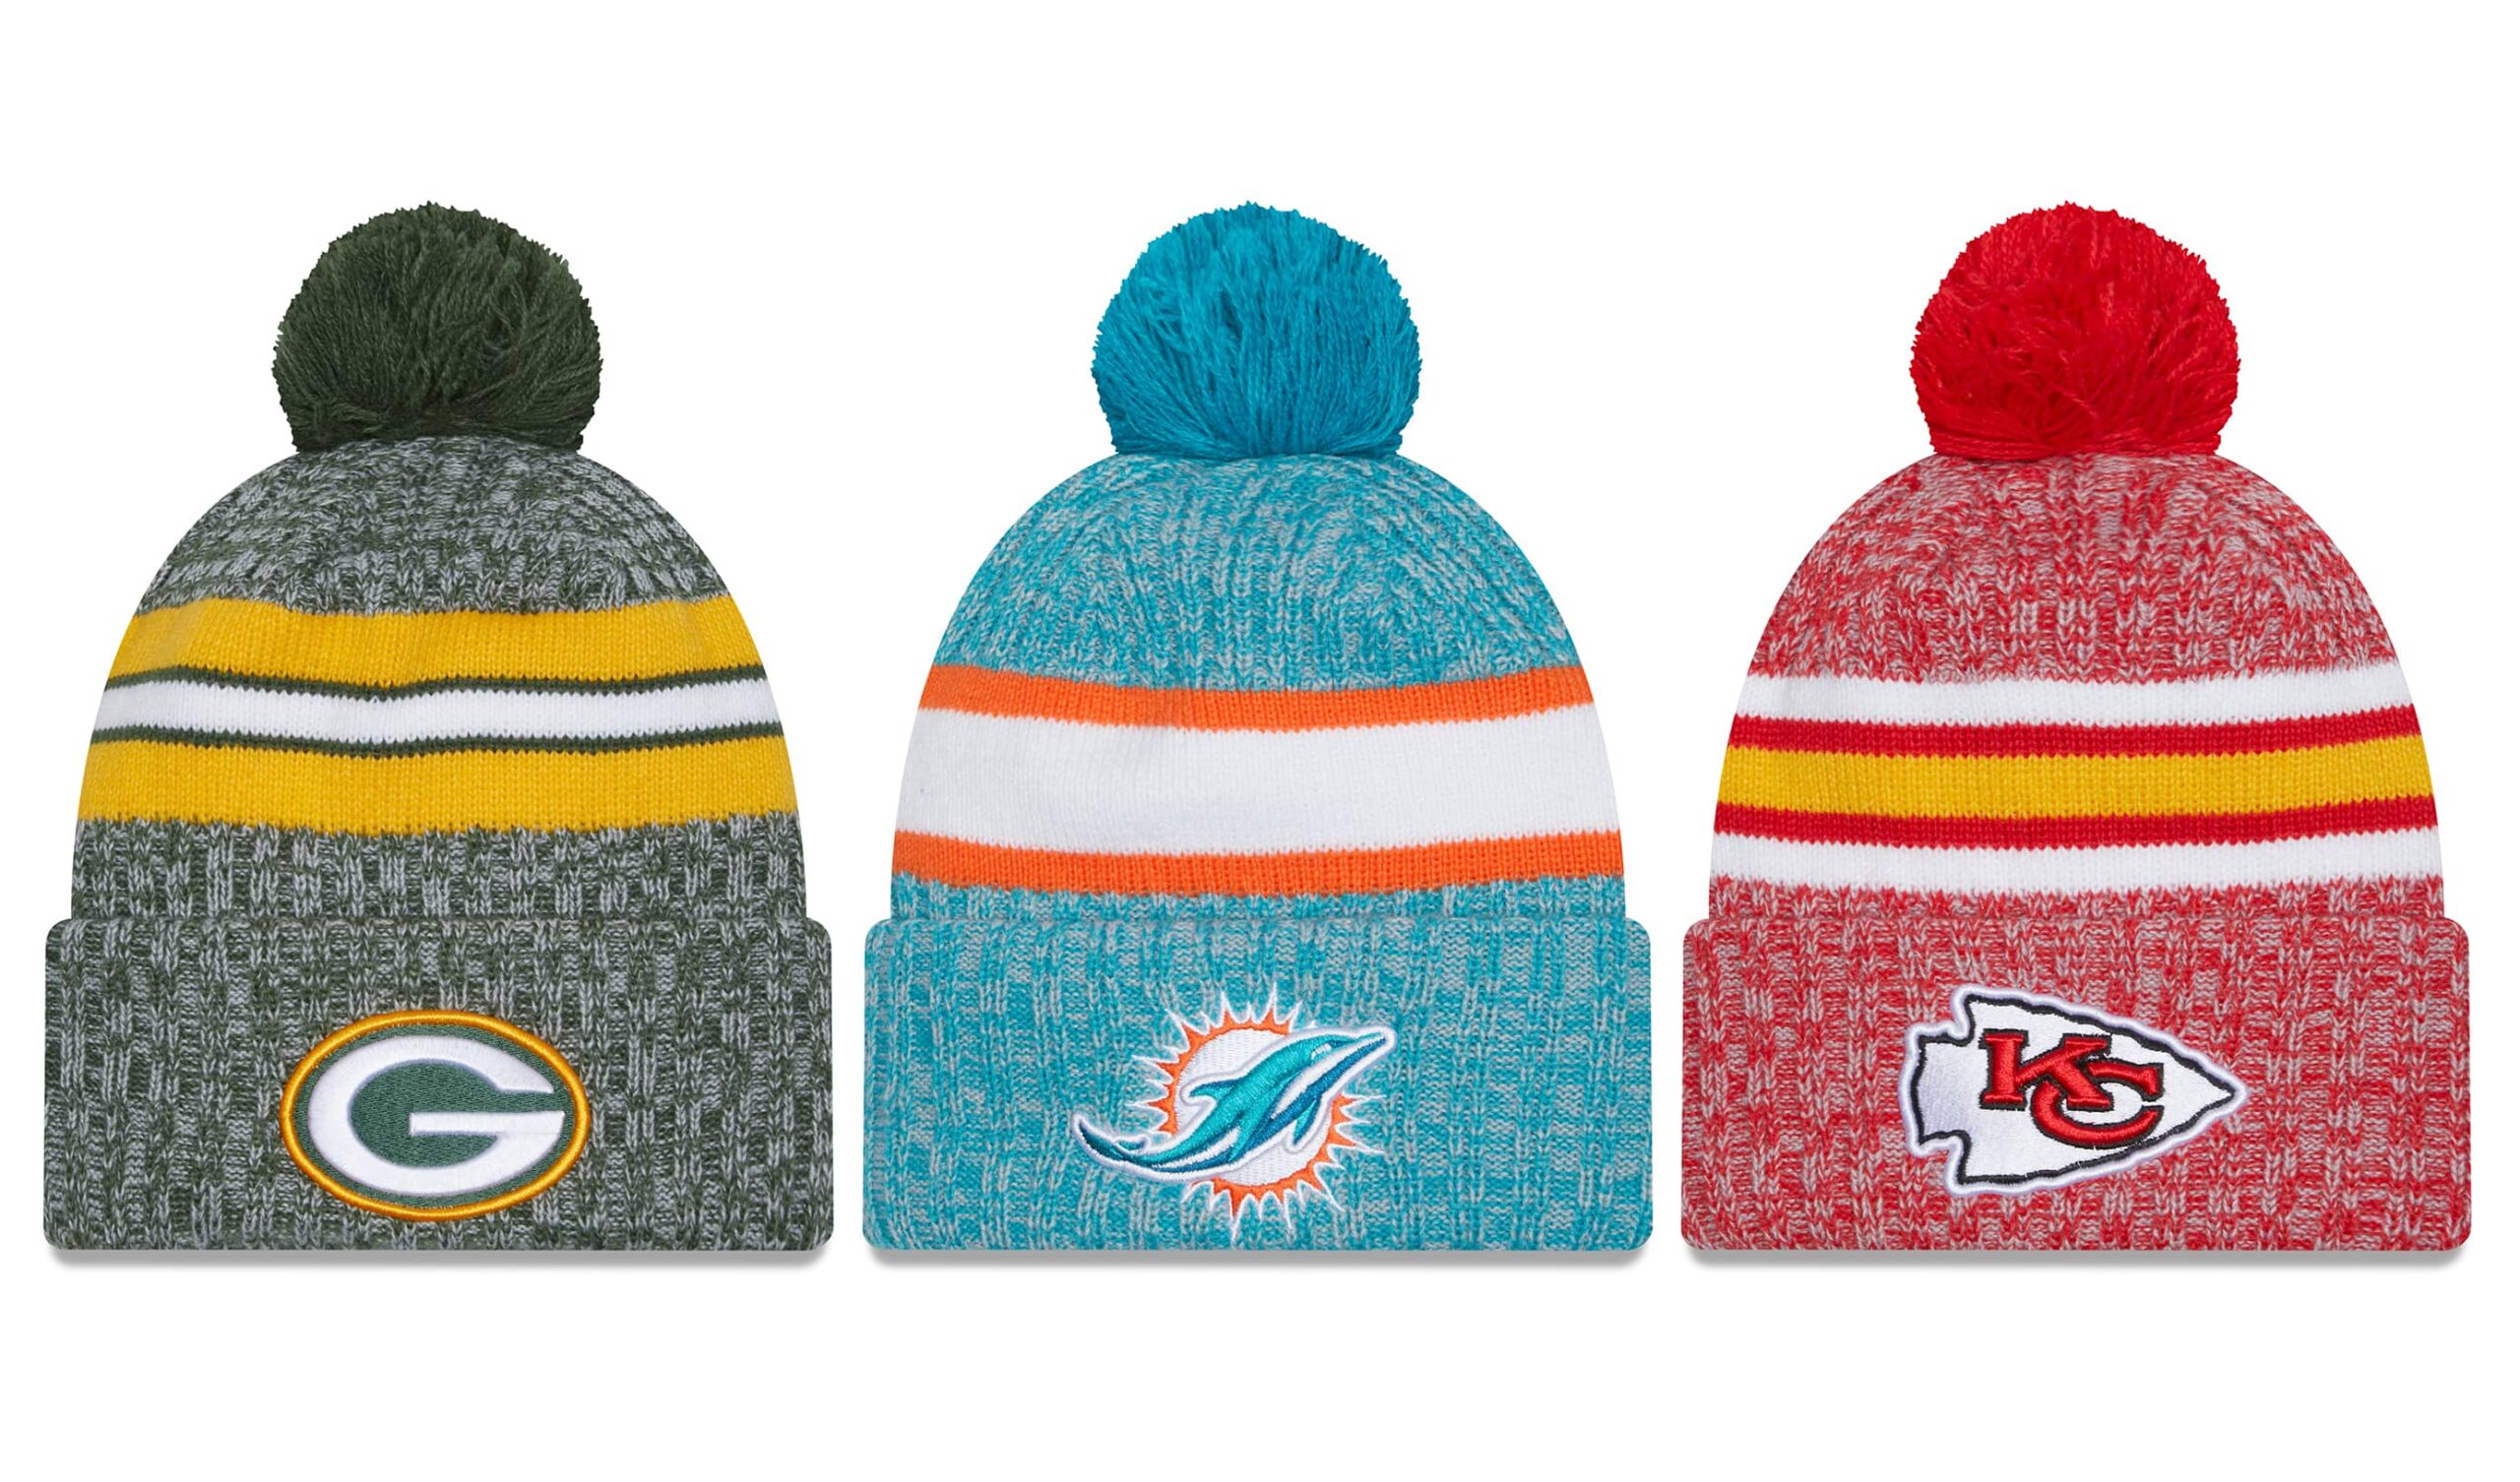 New Era x NFL knitted hats